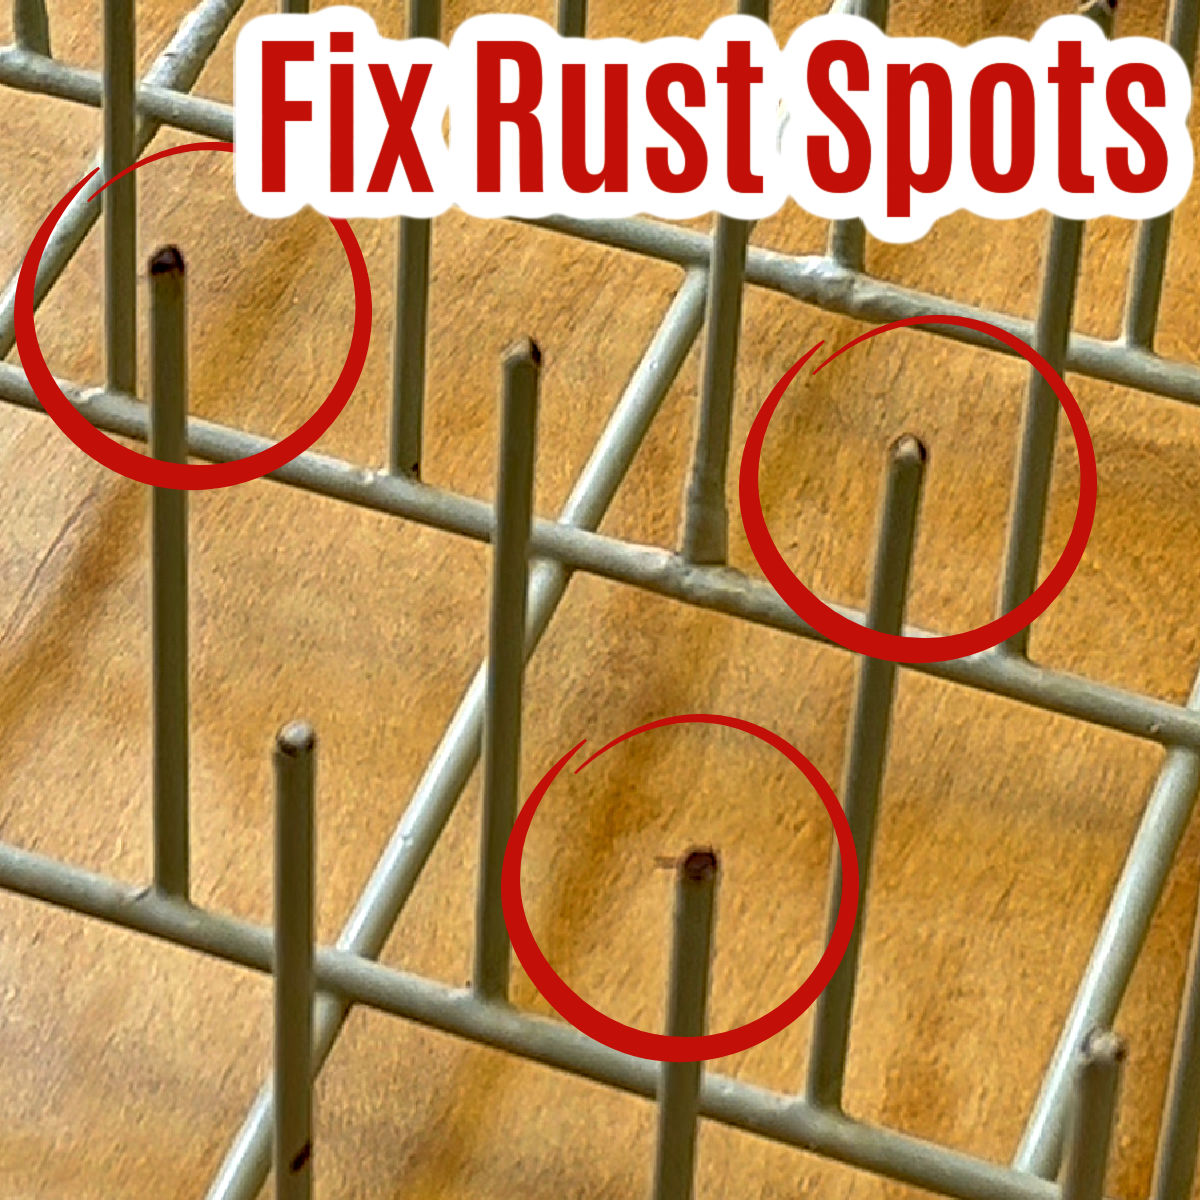 Painting And Repairing Rusty Or Damaged Dishwasher Racks -  AppliancePartsPros Blog